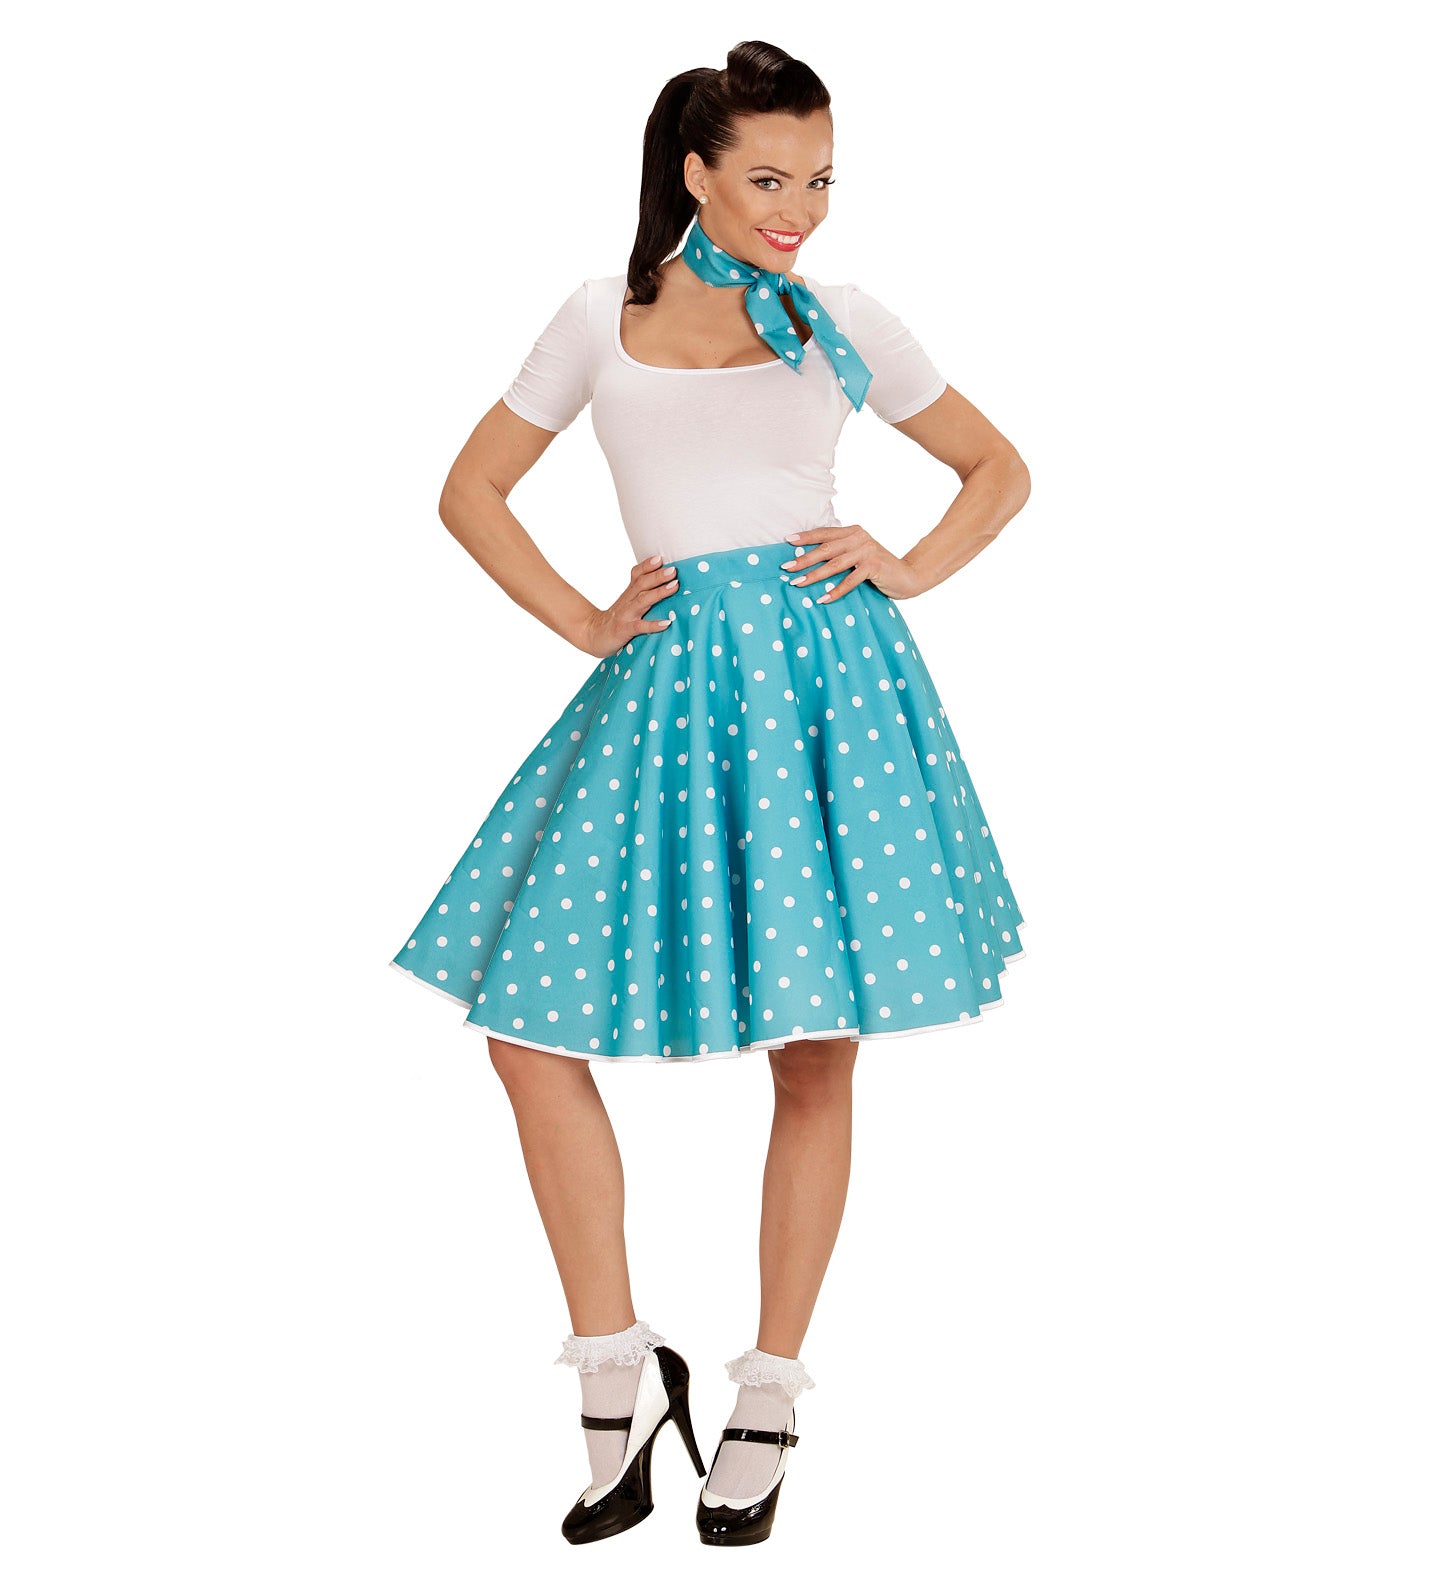 50's Rockabilly Blue Polka Dot Skirt outfit and Neckscarf